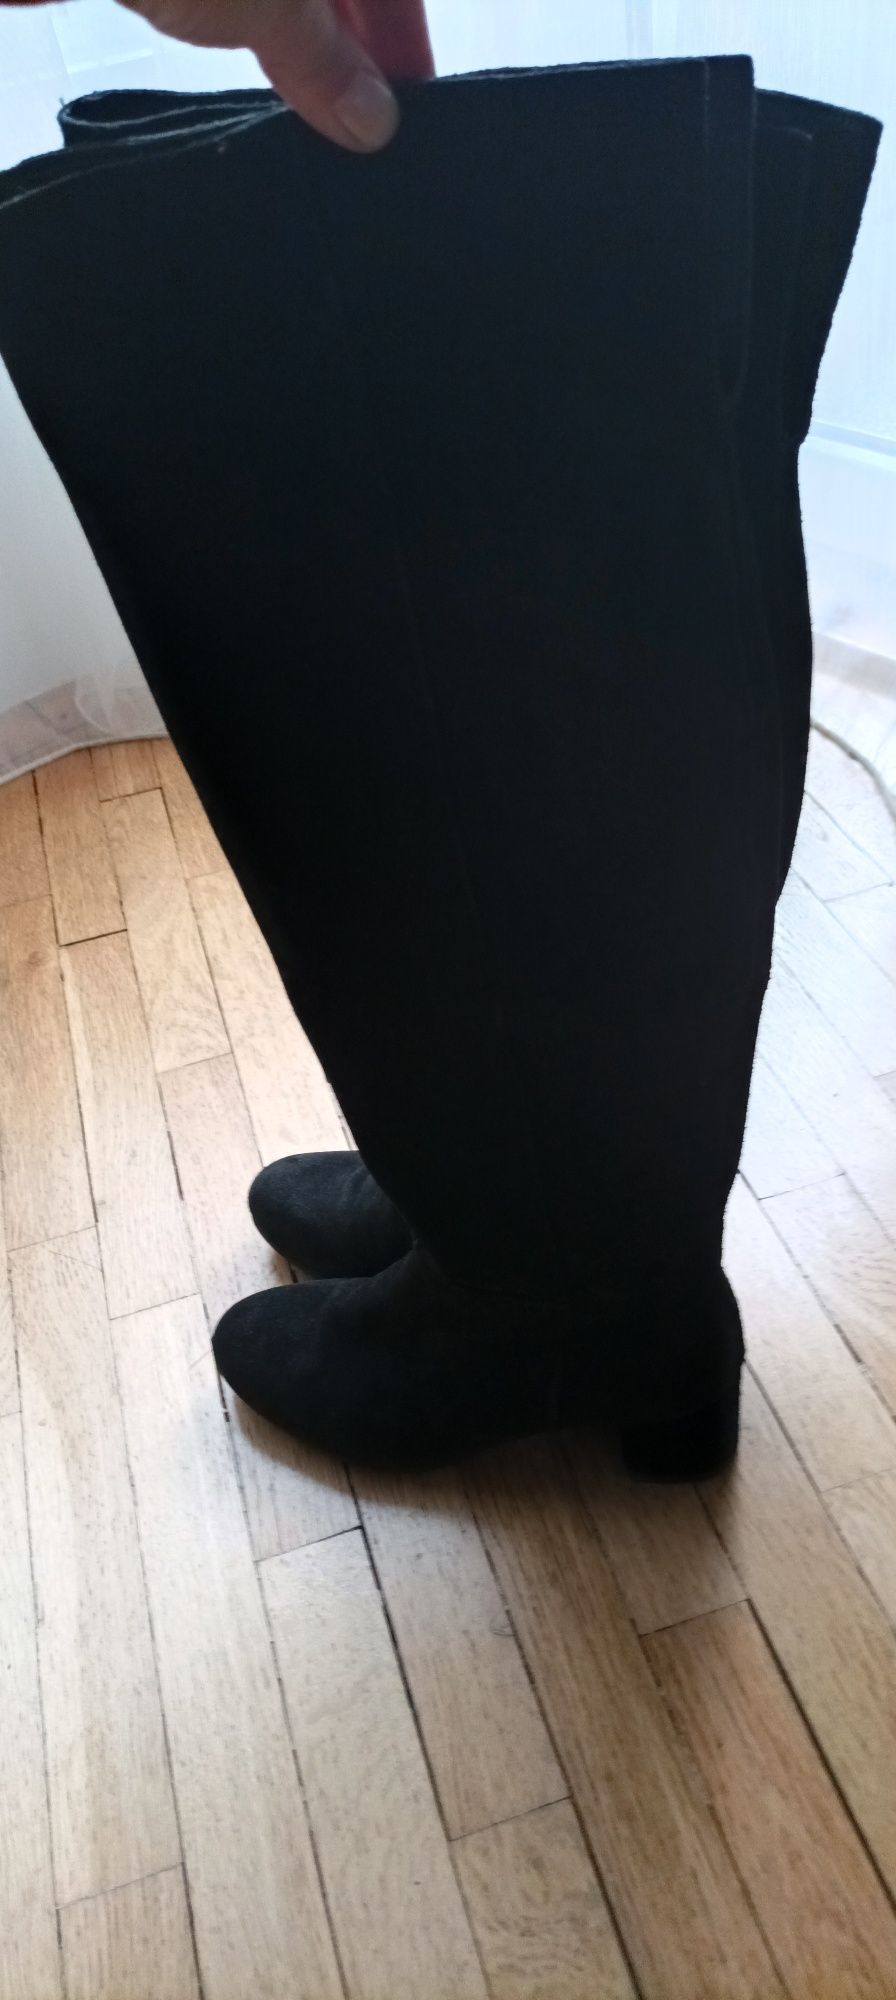 Дамски високи ботуши/чизми от естествен велур марка "Reserved "